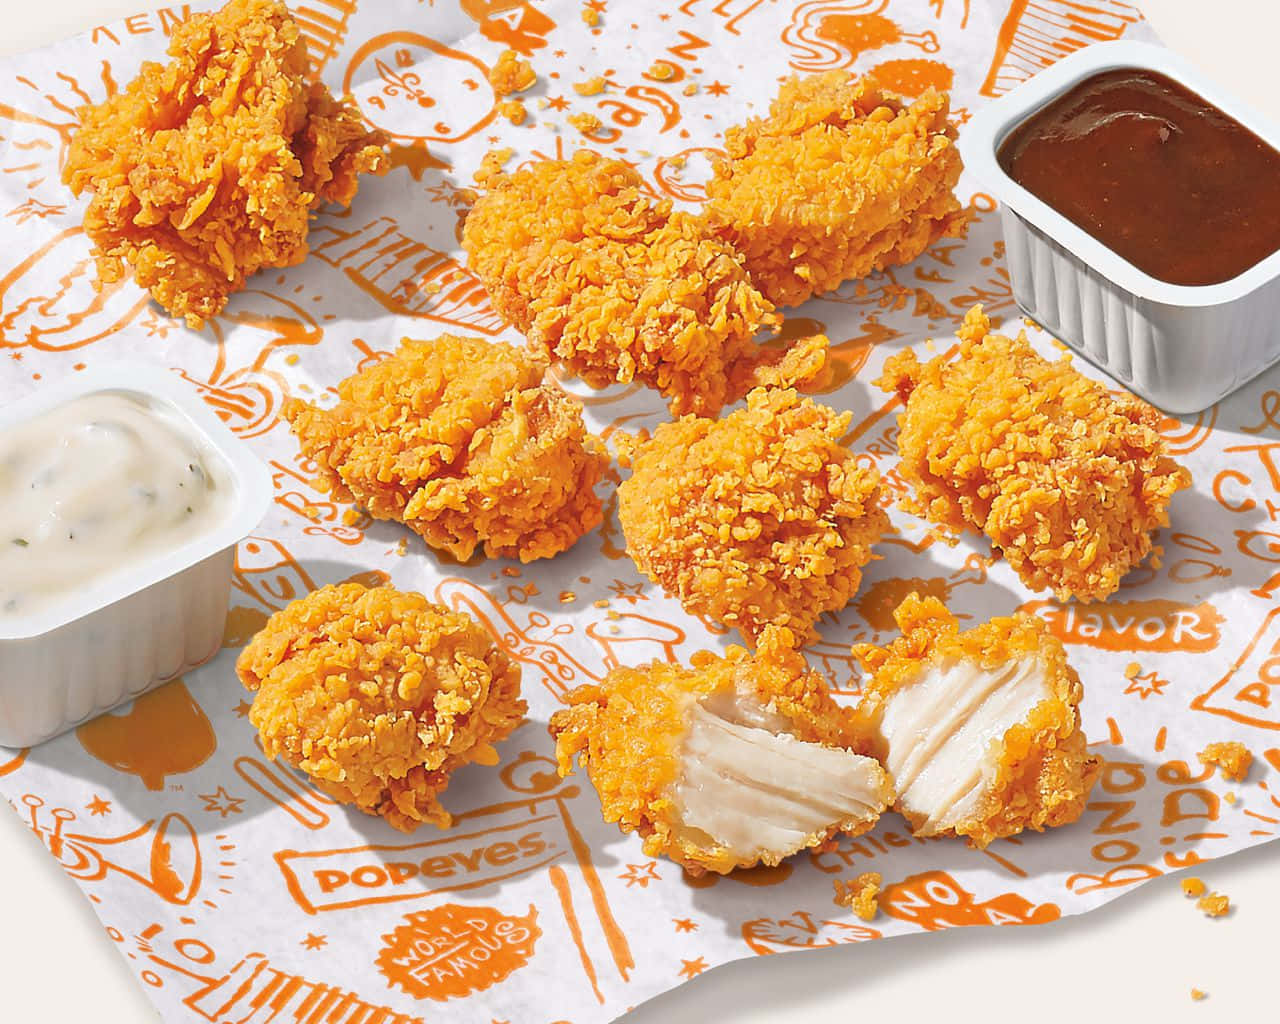 Enjoy scrumptious, juicy chicken nuggets anytime. Wallpaper